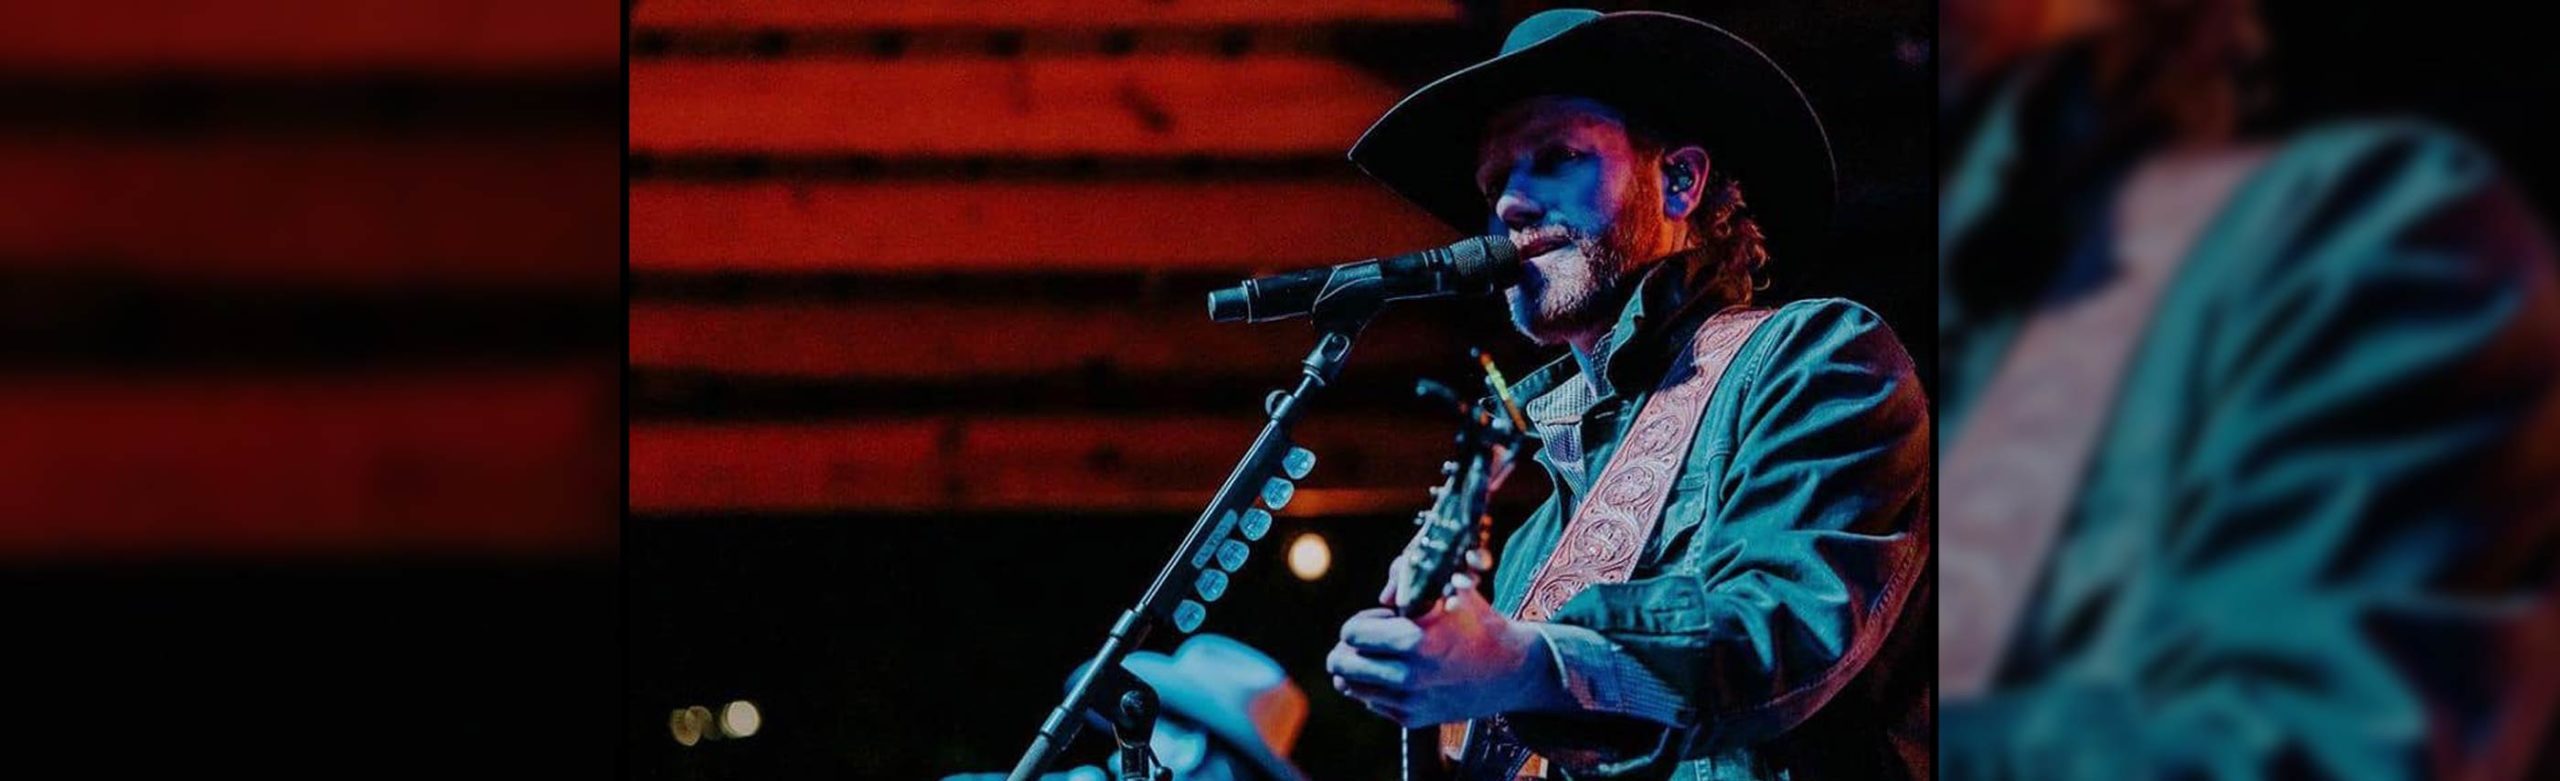 Cowboy Country Artist Chancey Williams Confirms Bozeman Concert Image